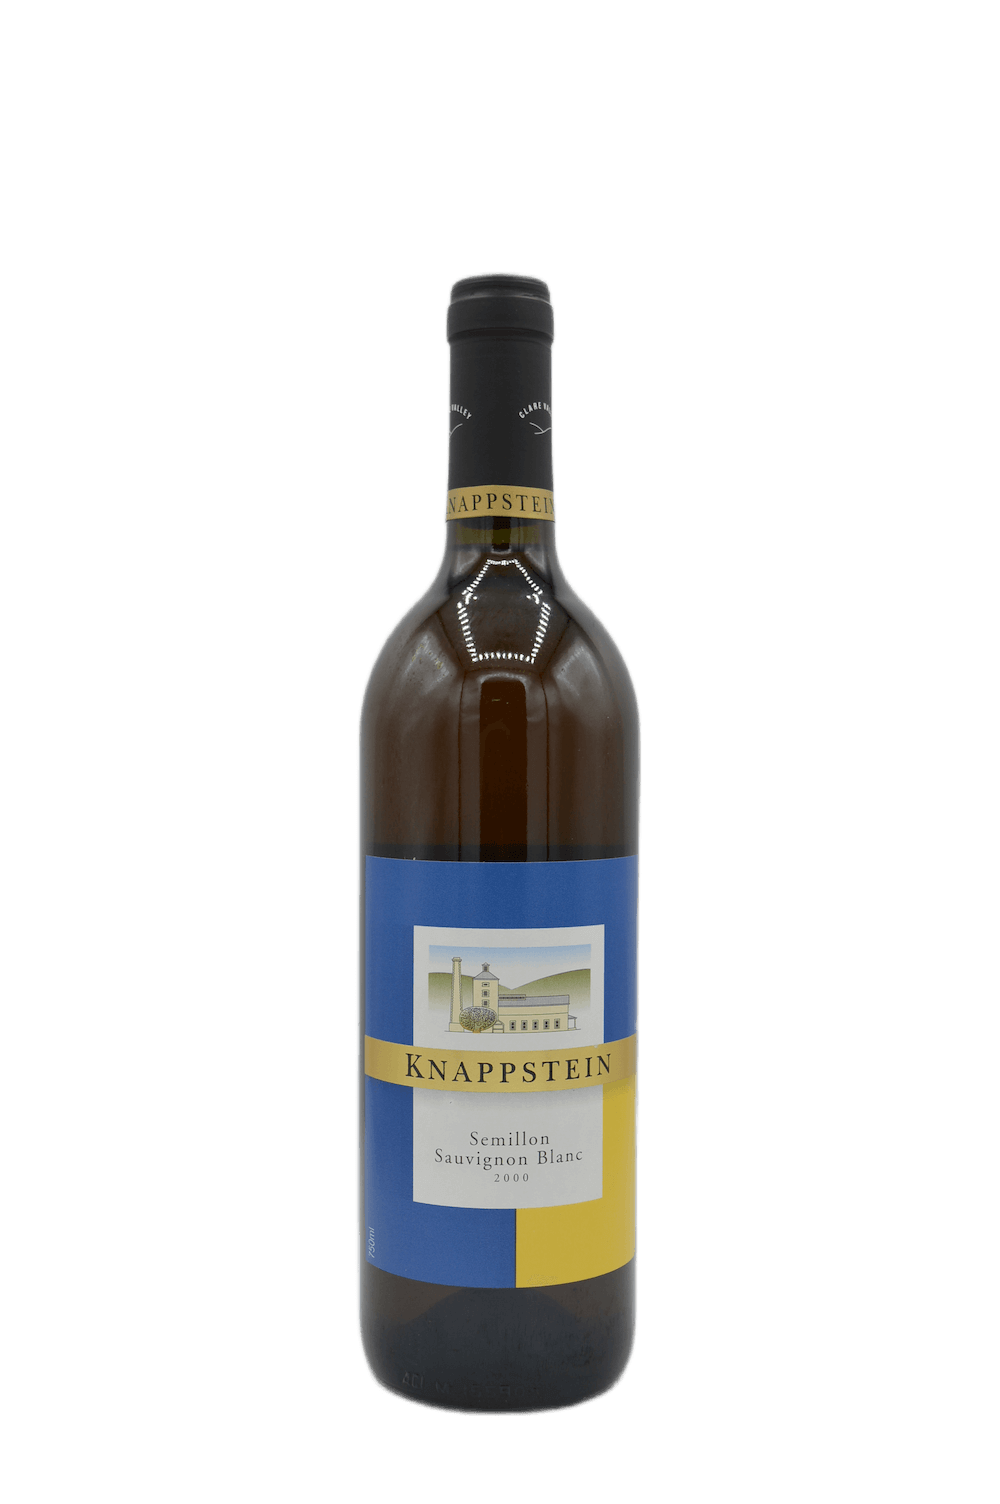 Knappstein Semillon Sauvignon Blanc 2000